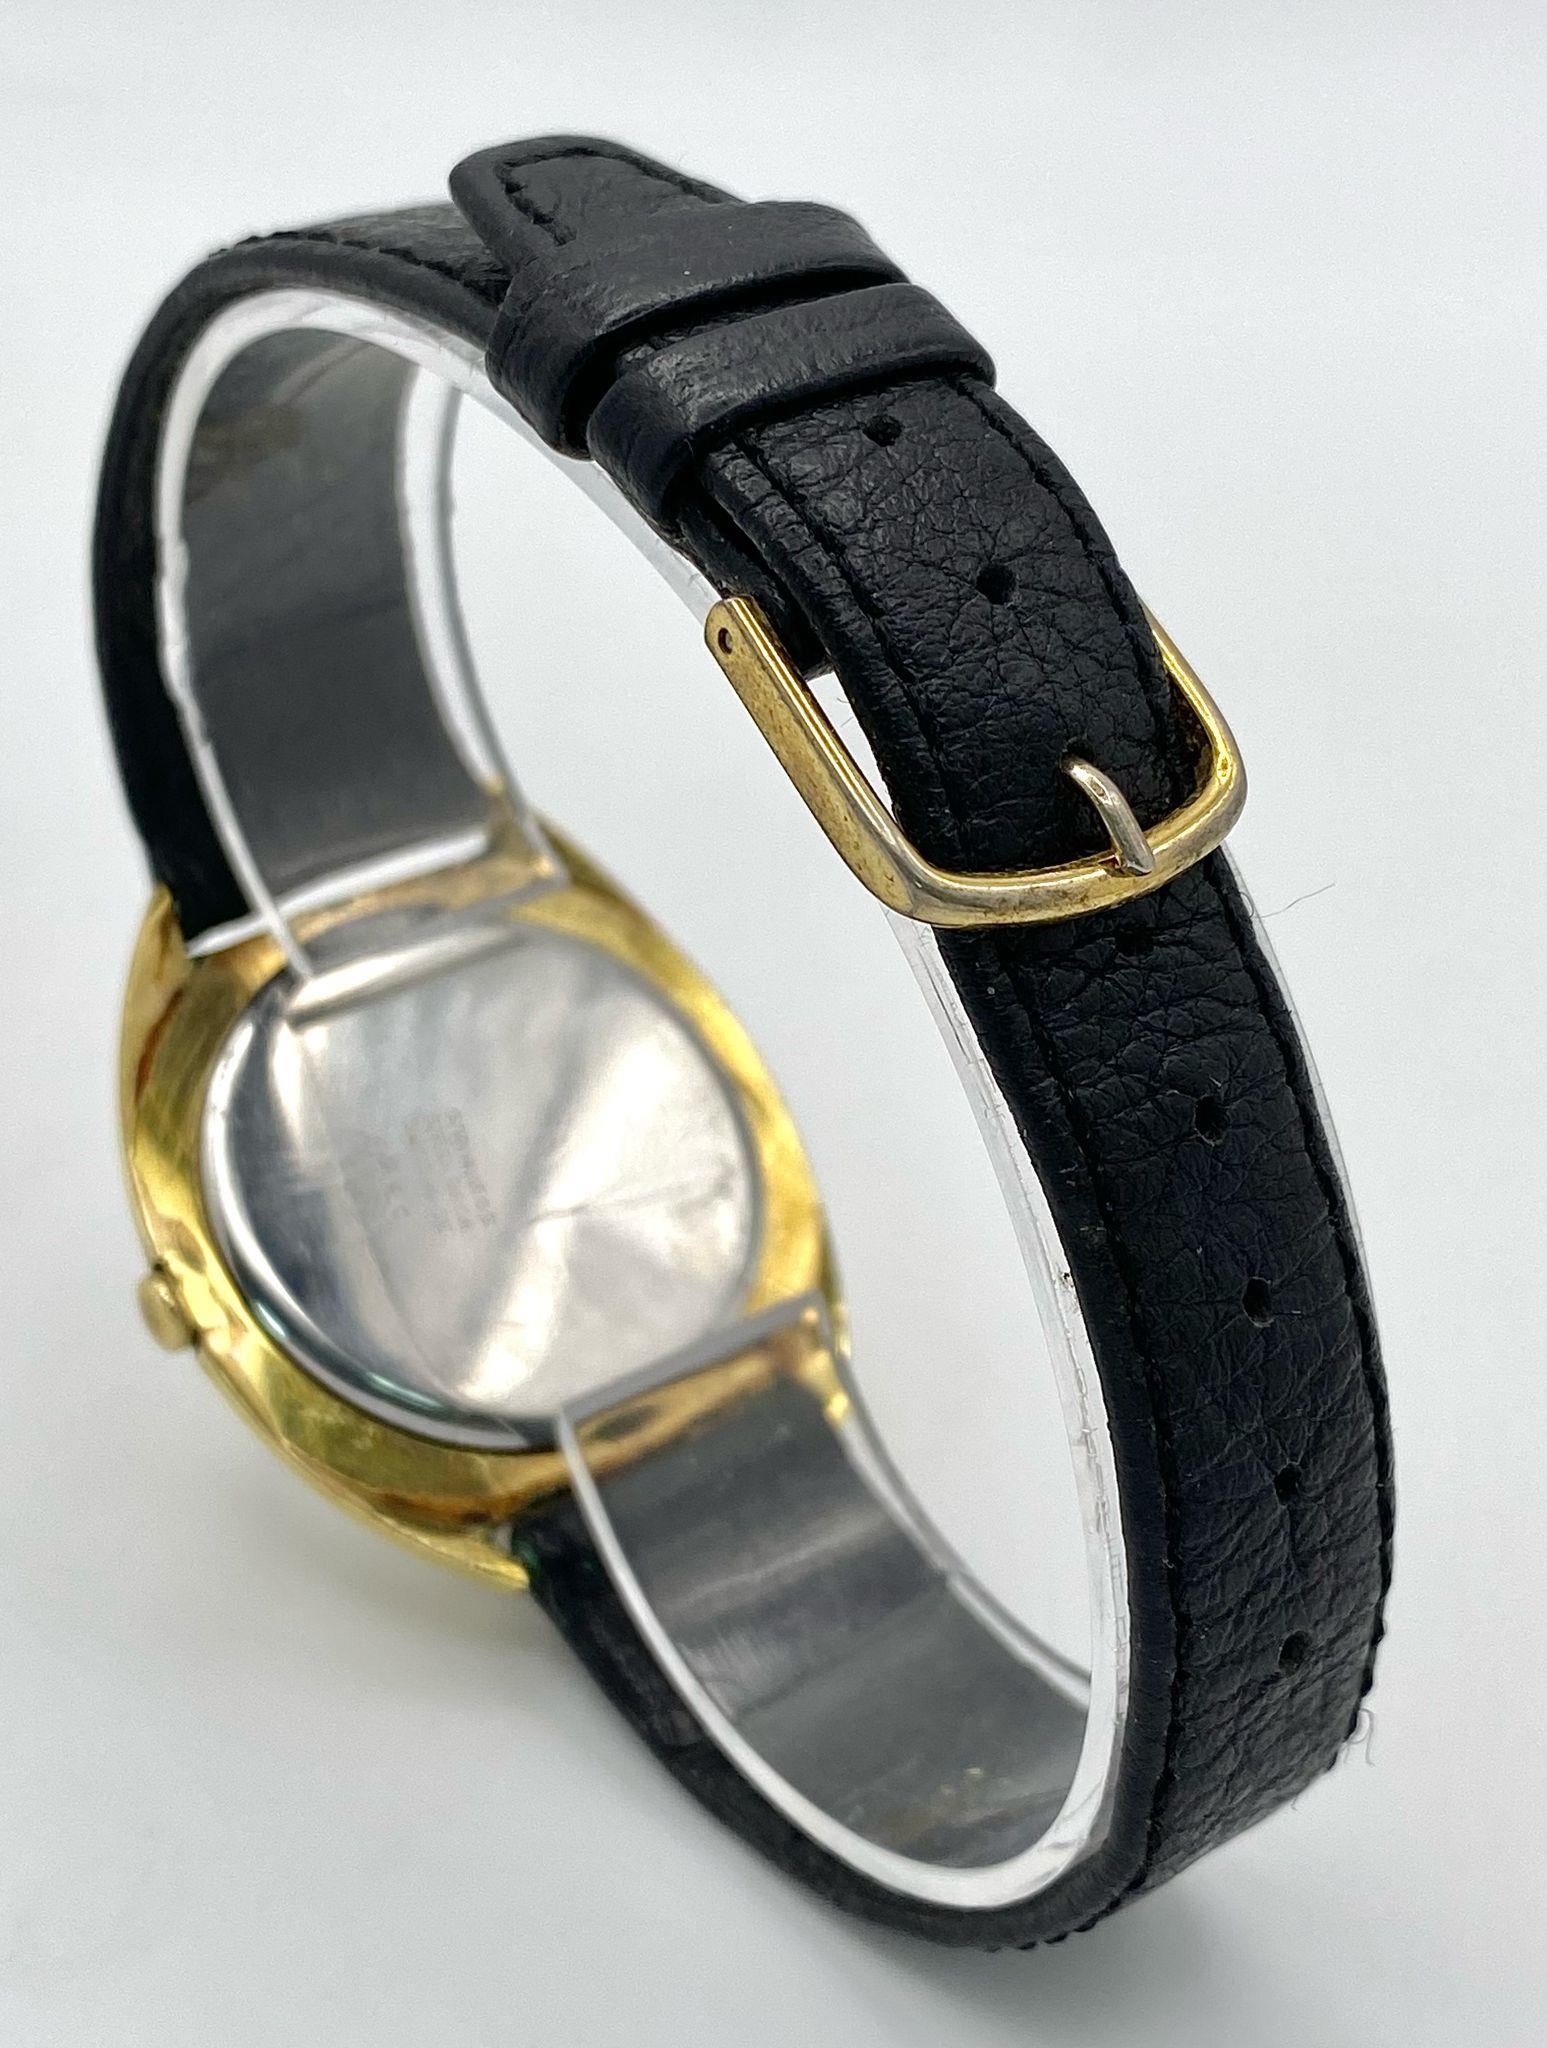 A Vintage 17 Jewels Delvina Mechanical Gents Watch. Black leather strap. Gilded case - 36mm. - Image 5 of 7